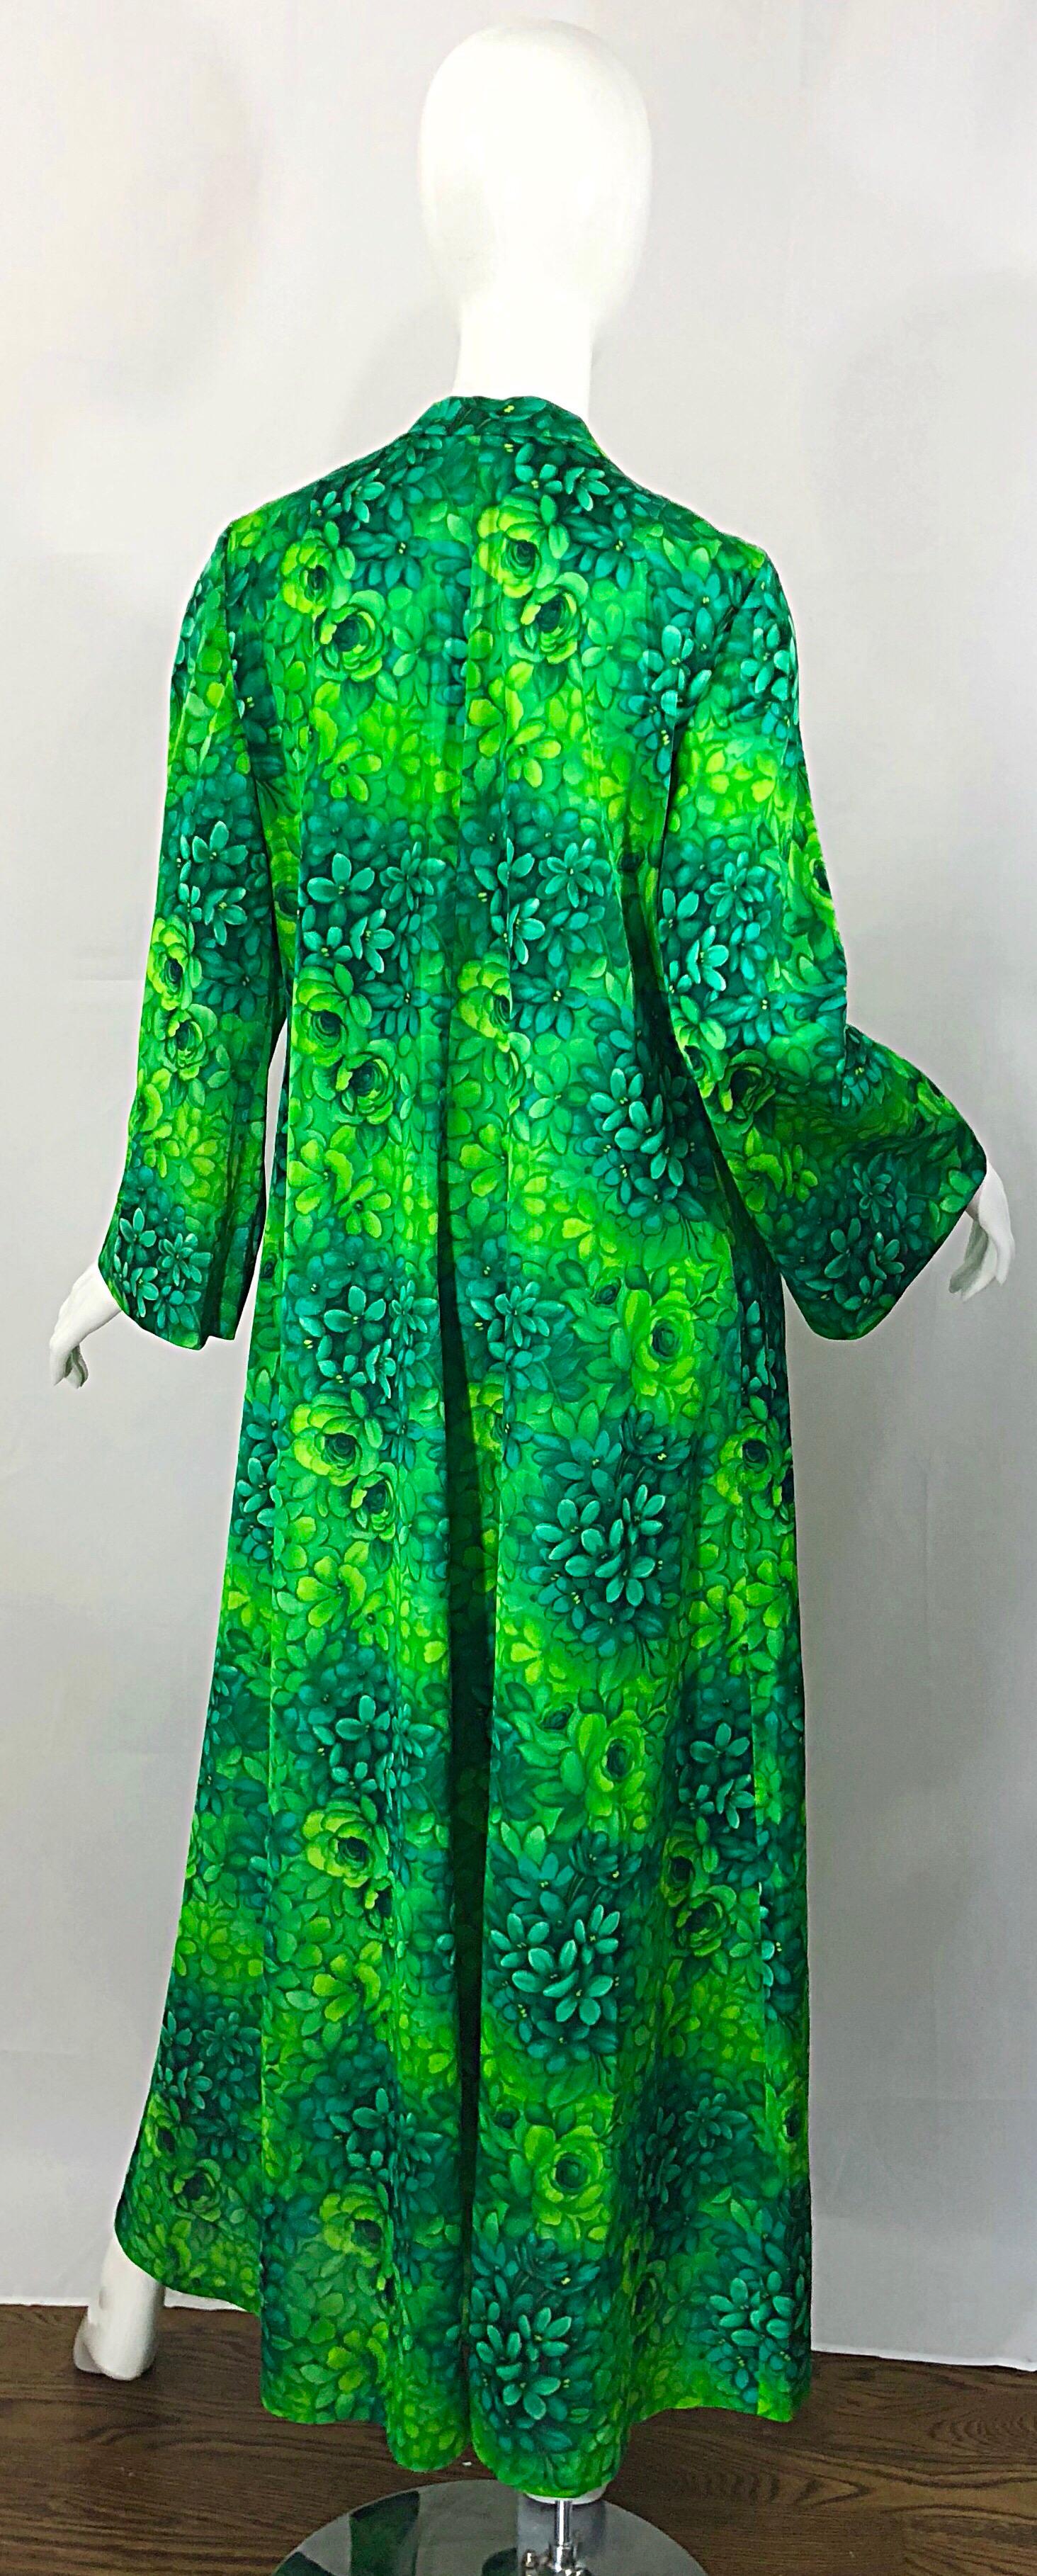 Women's Amazing 1970s Neon + Kelly Green Abstract Flower Print 70s Vintage Caftan Dress